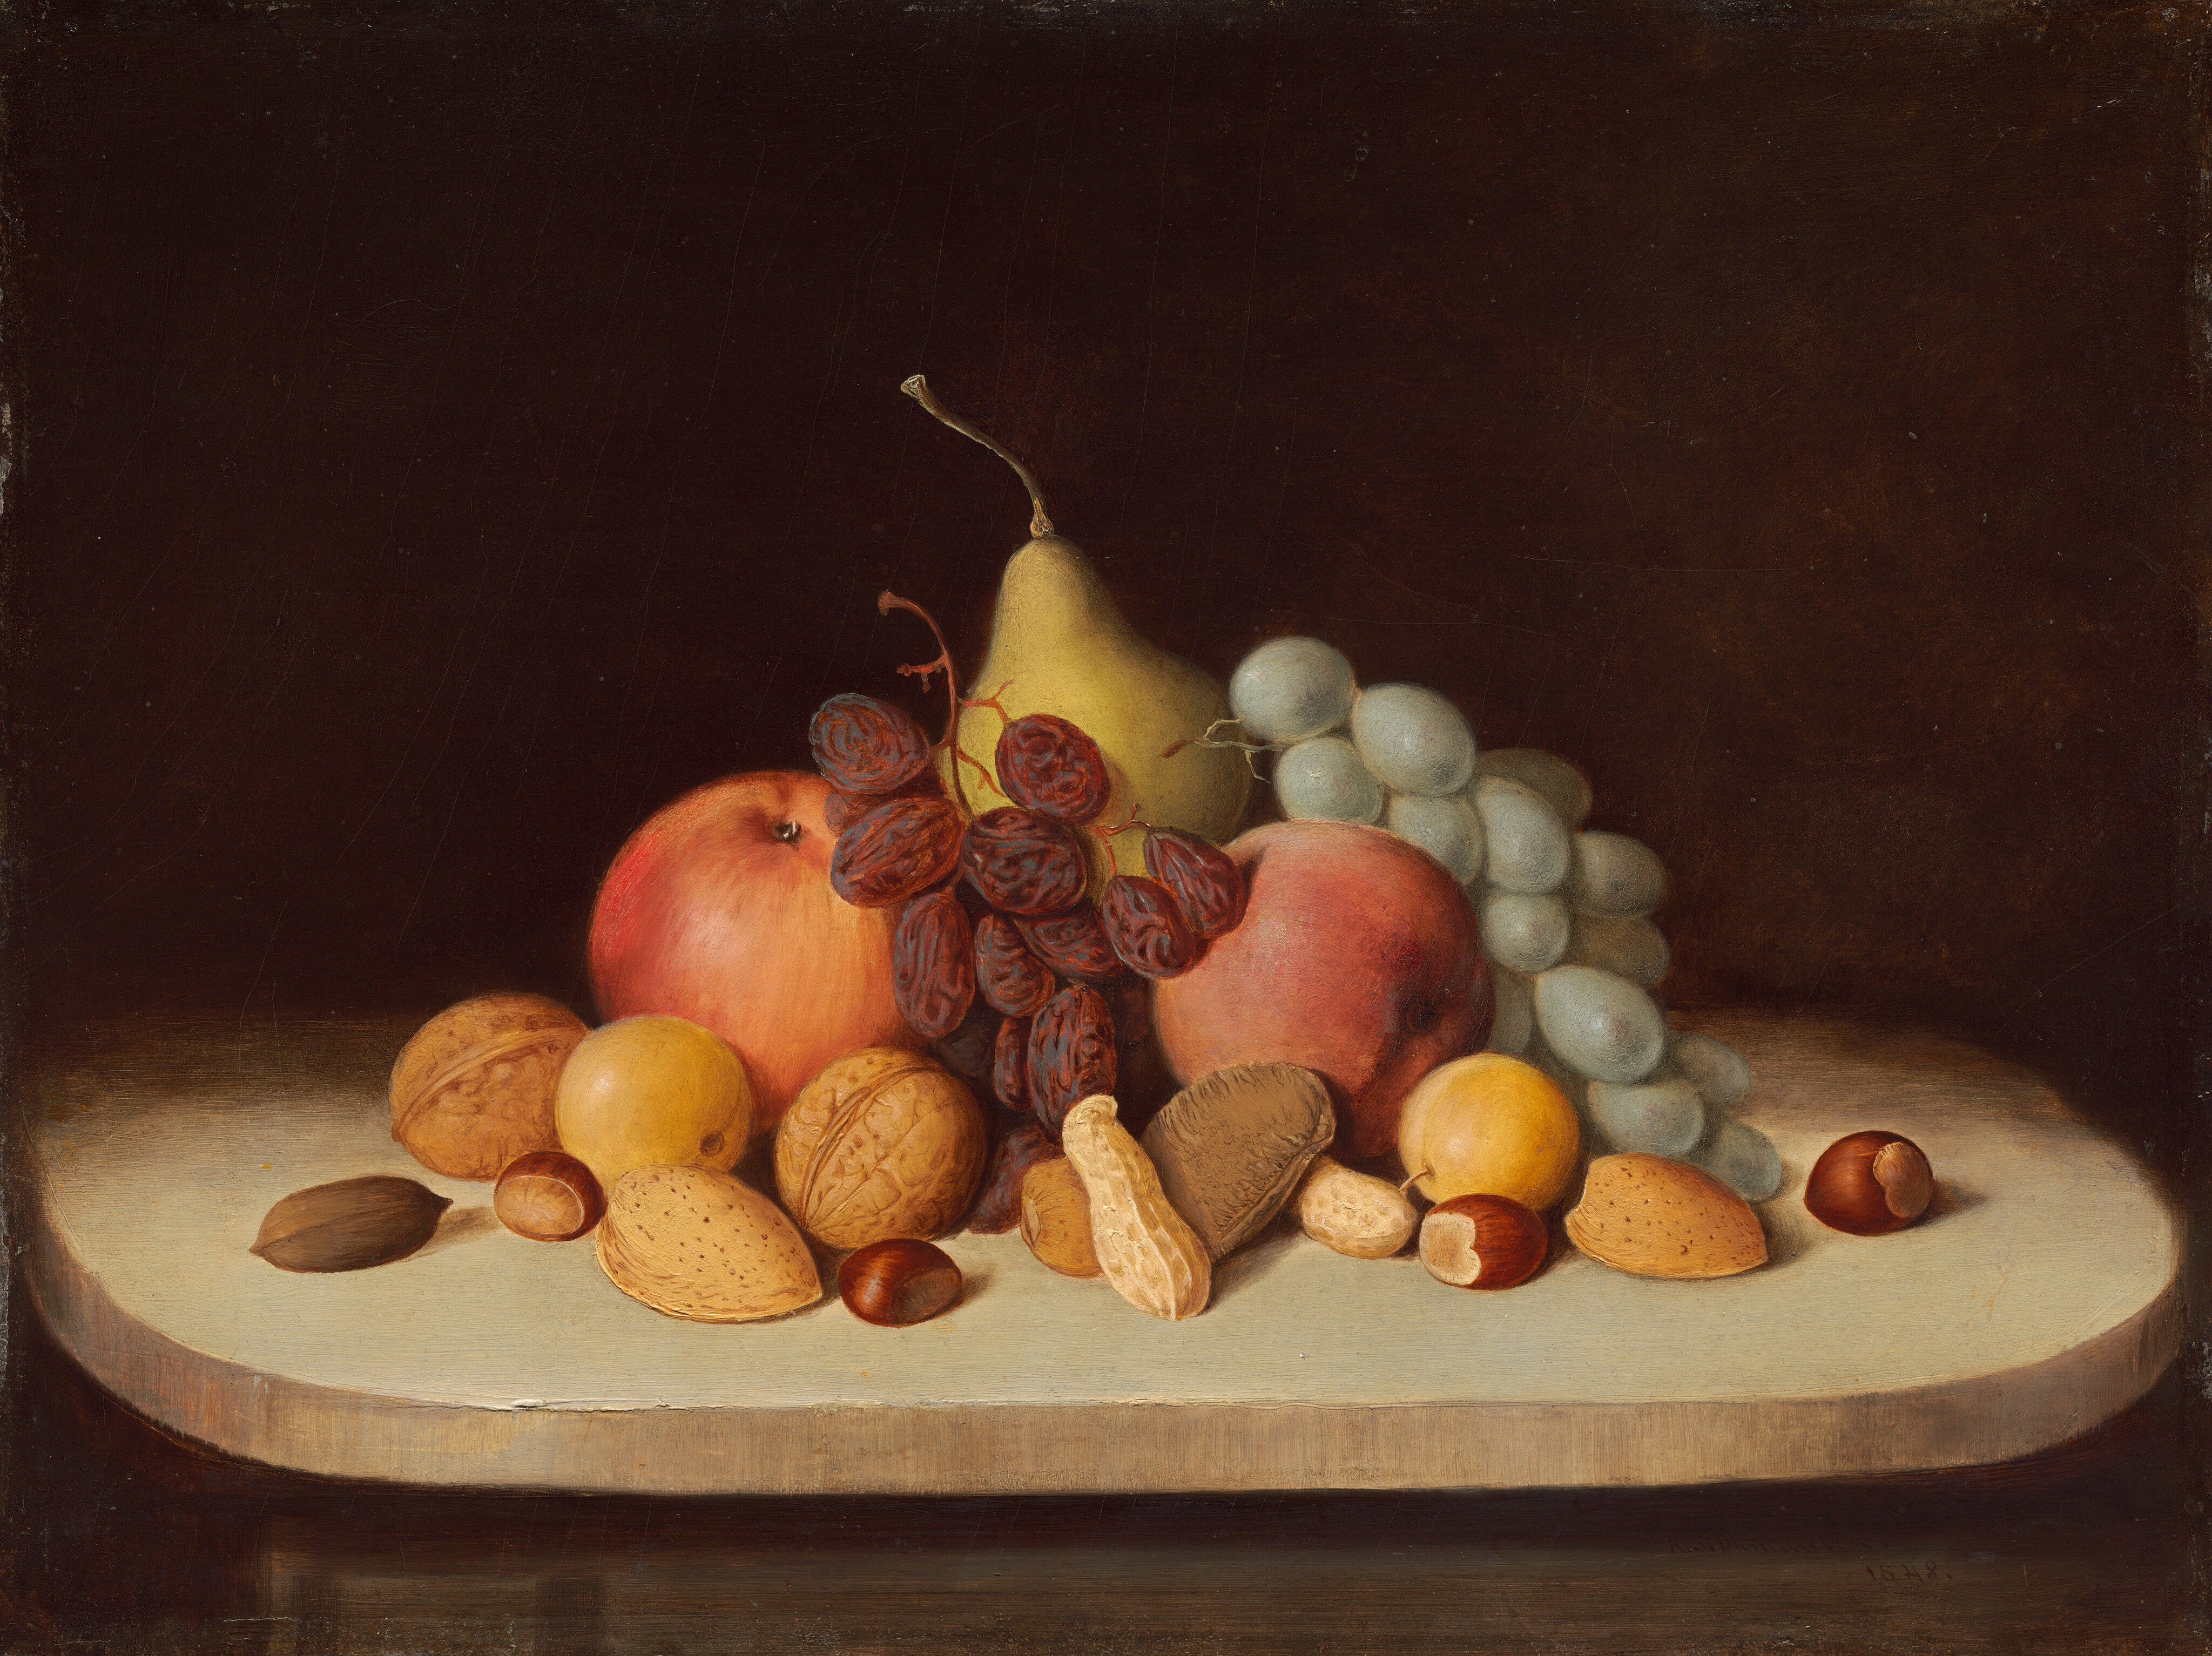 Meyve ve Fındıklı Natürmort (orig. "Still Life with Fruit and Nuts") by Robert Duncanson - 1848 - 30.48 x 40.64 cm 